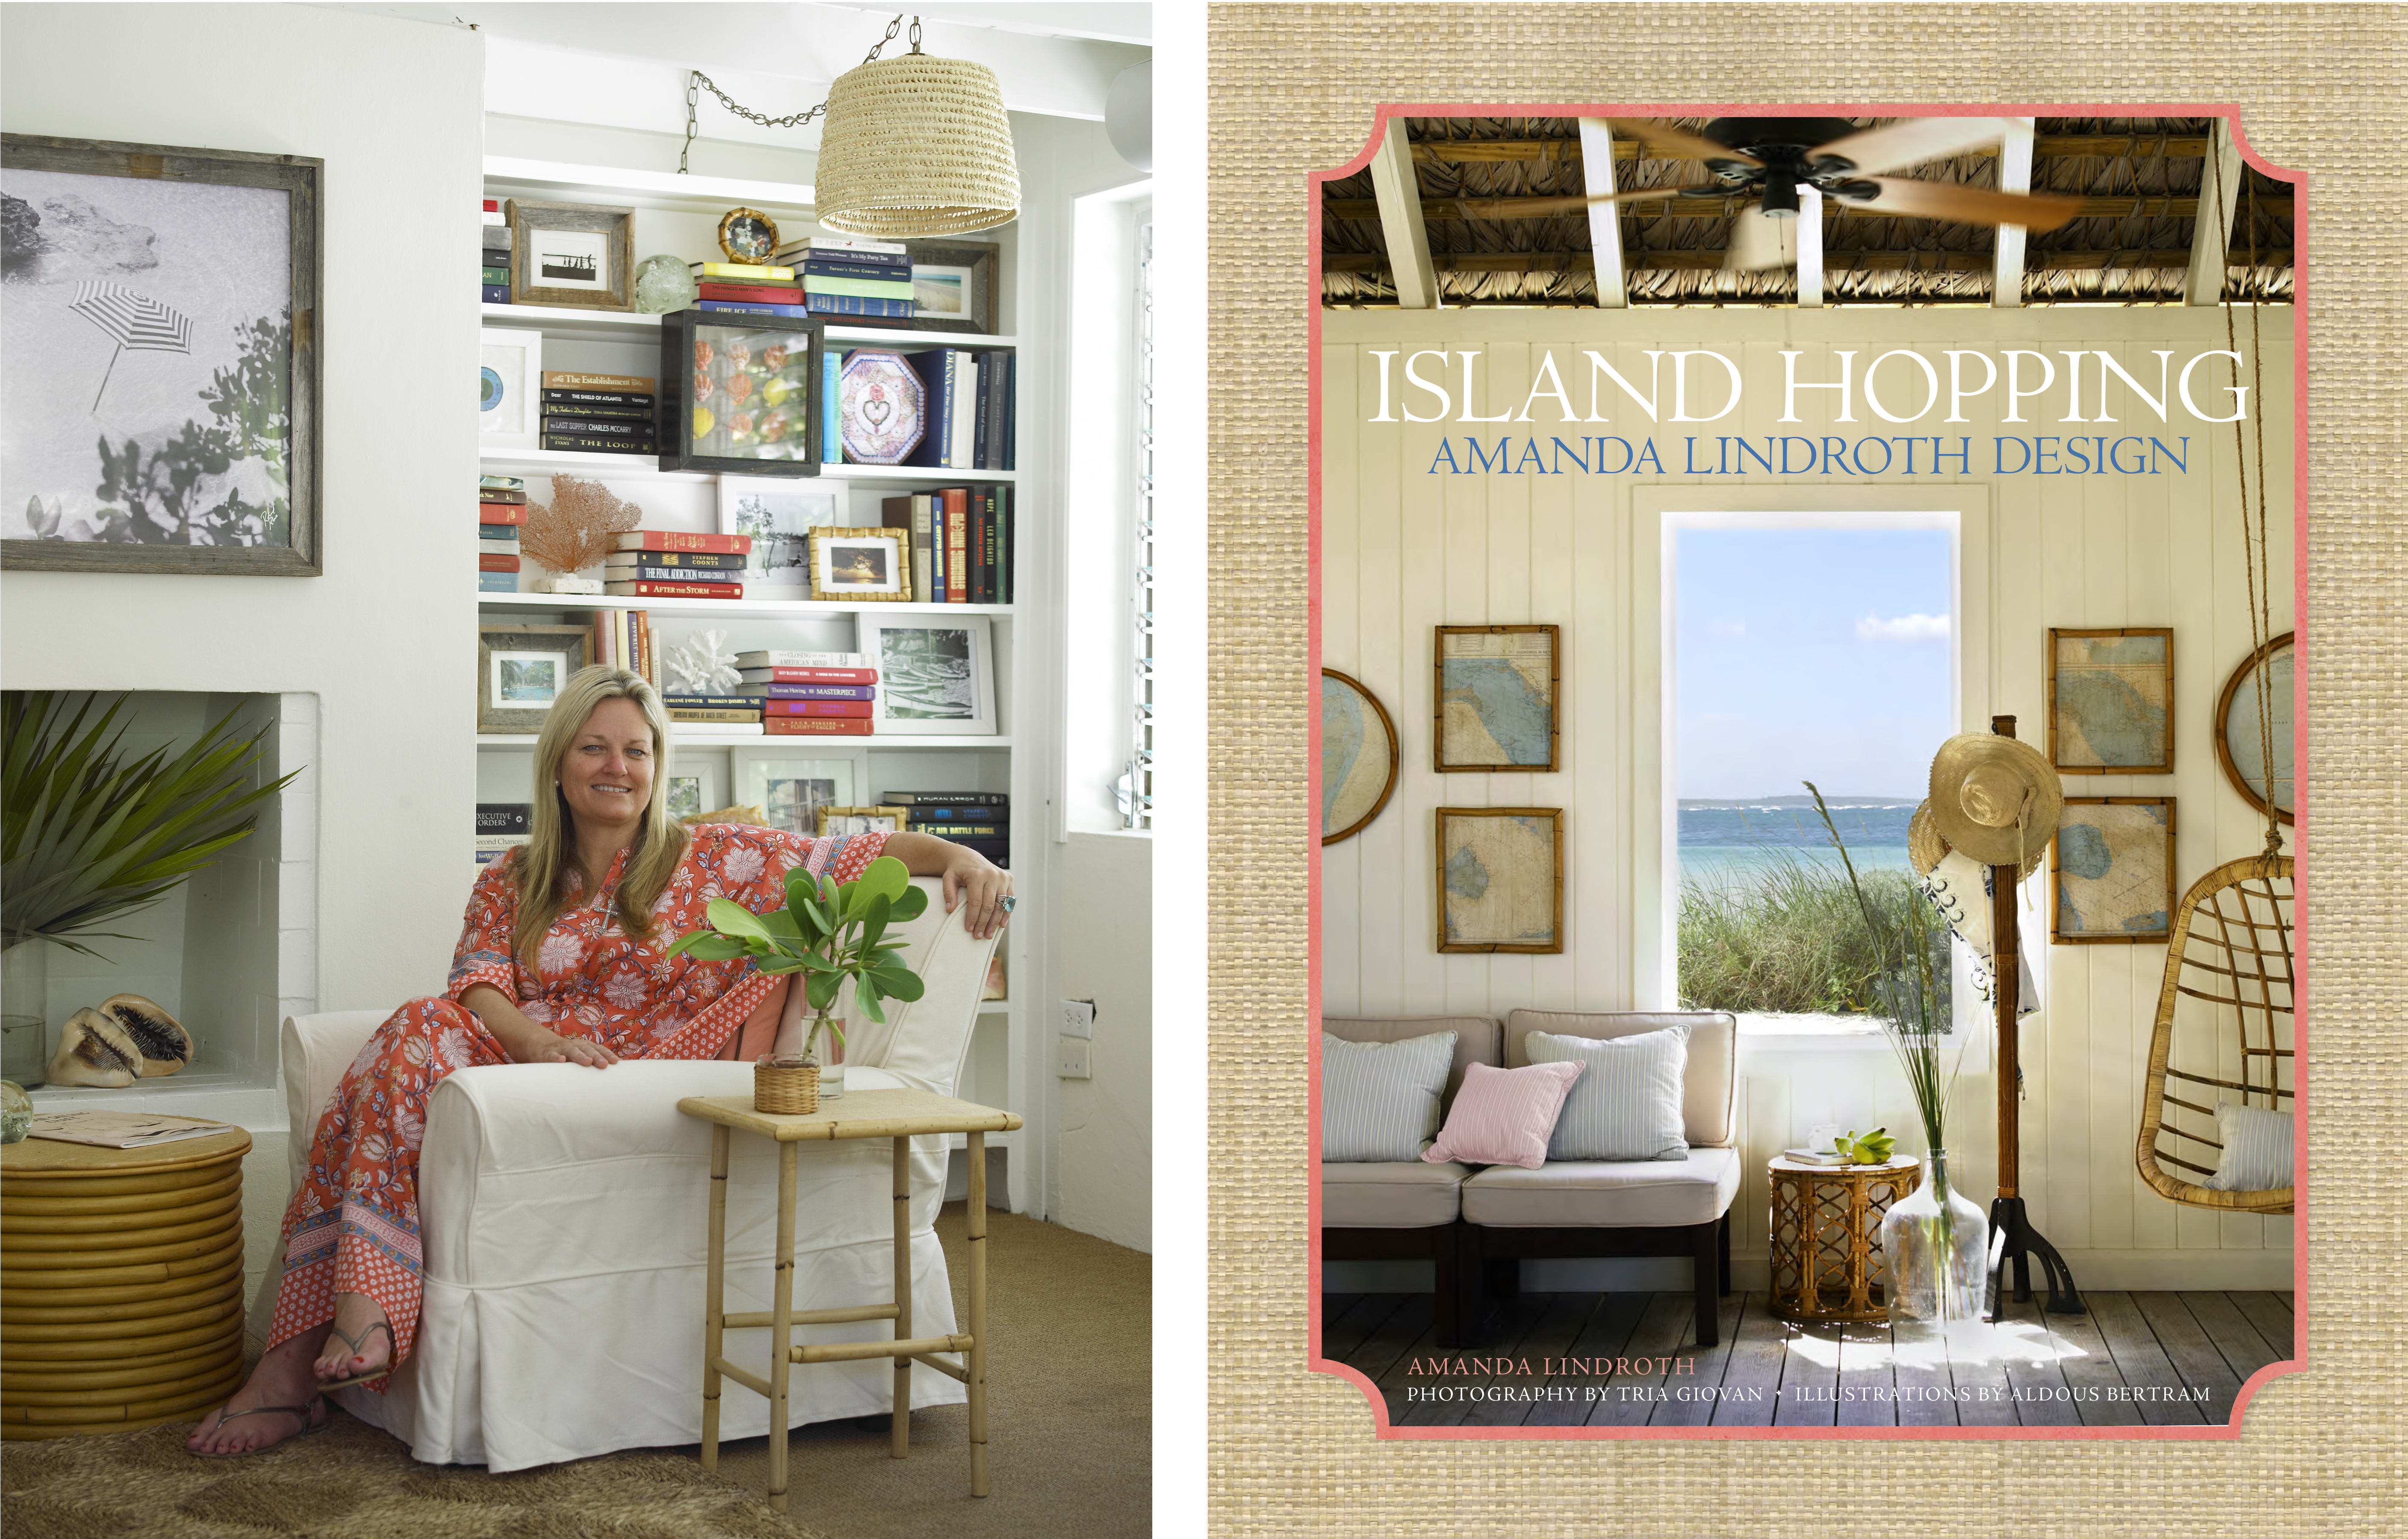 Amanda’s new book, Island Hopping Image